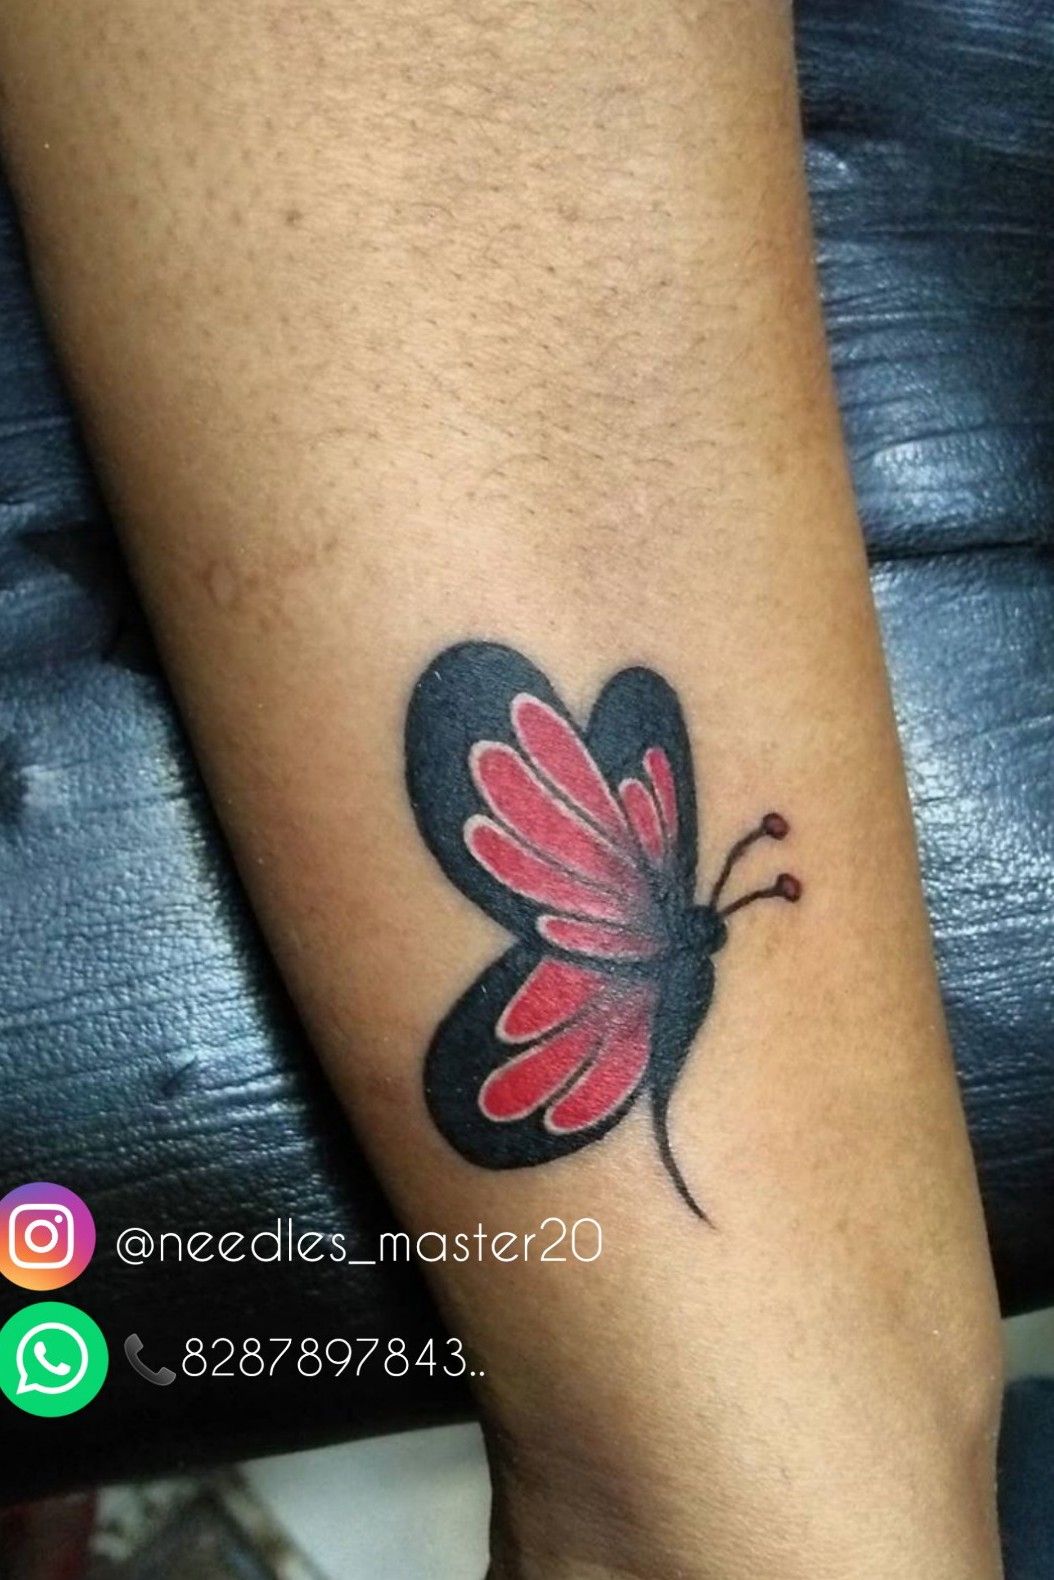 Sushant gets inked, dedicates tattoo to mom